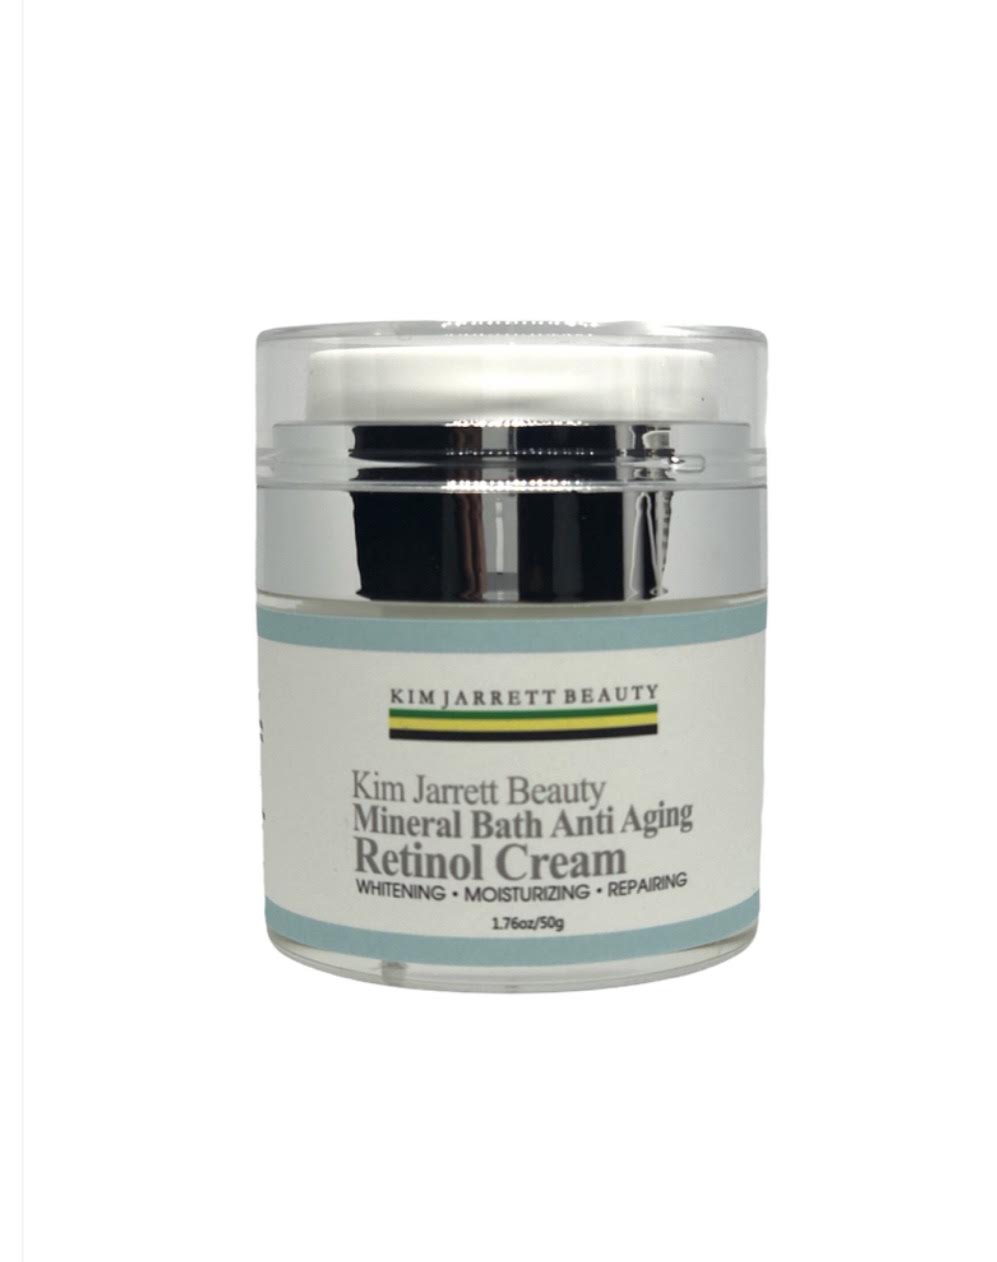 Mineral Bath Anti Aging Retinol Cream